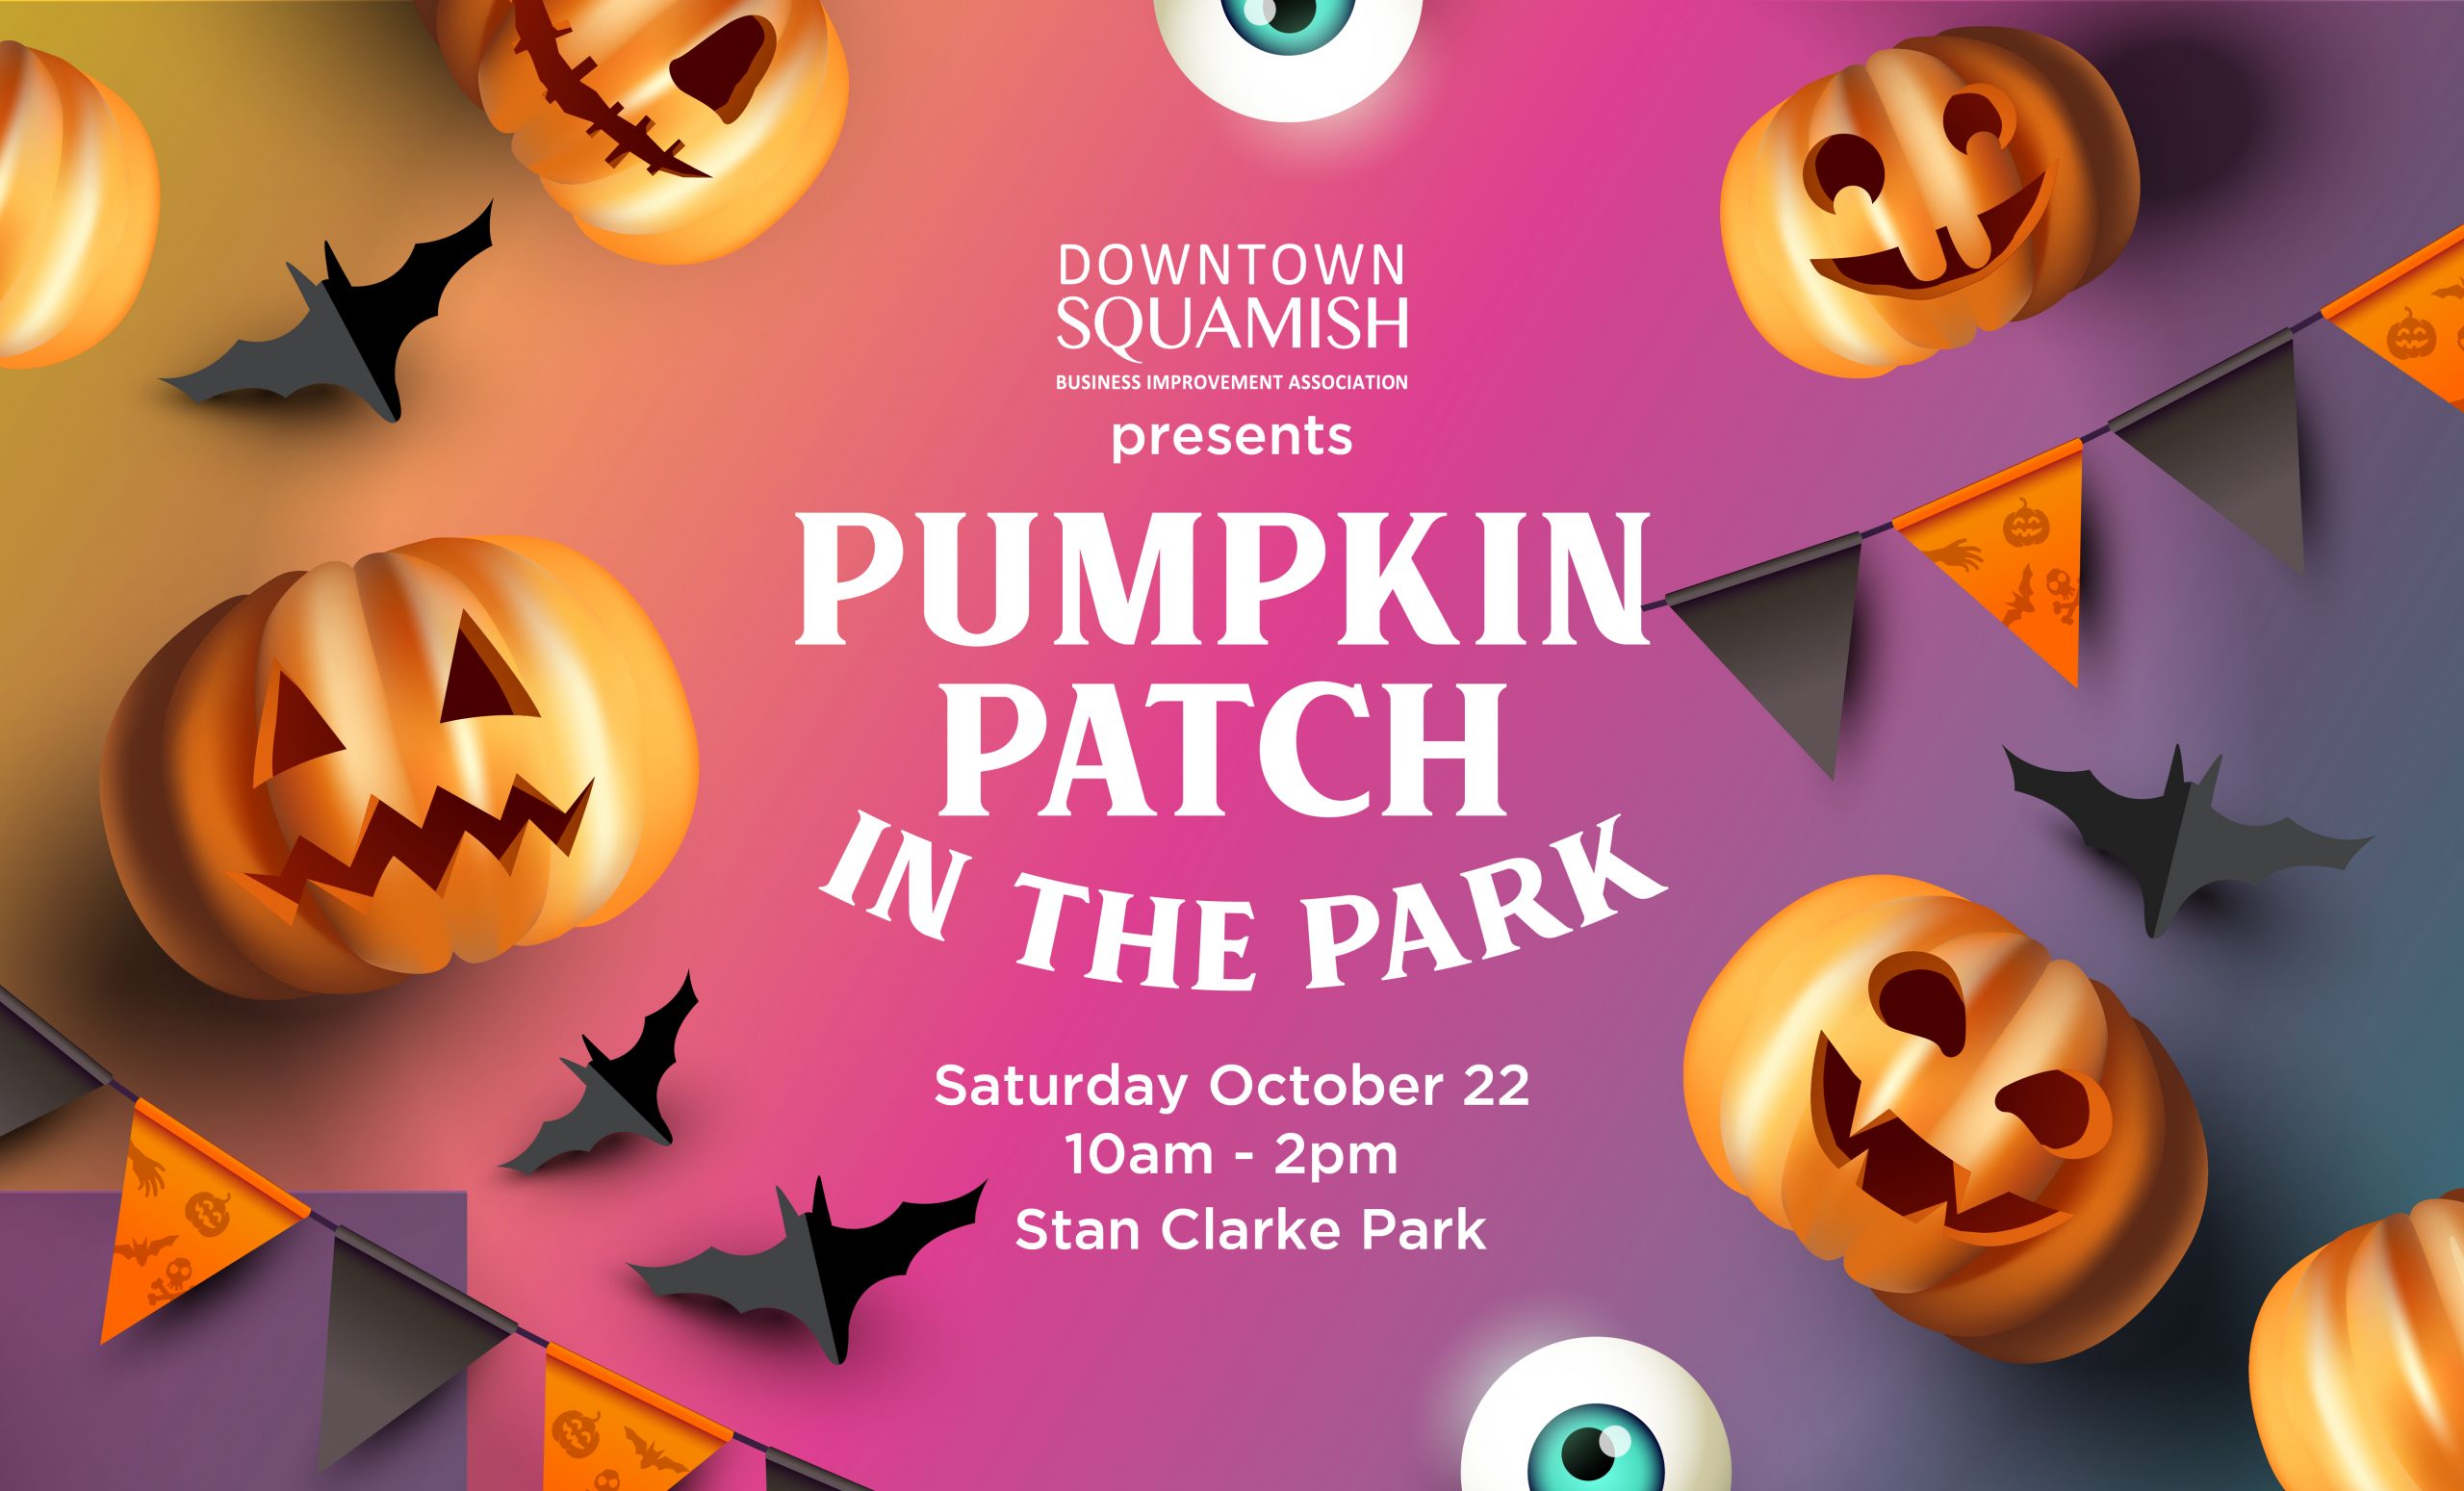 https://www.downtownsquamish.com/wp-content/uploads/2022/09/PumpkinPatch_mailchimp-scaled.jpg